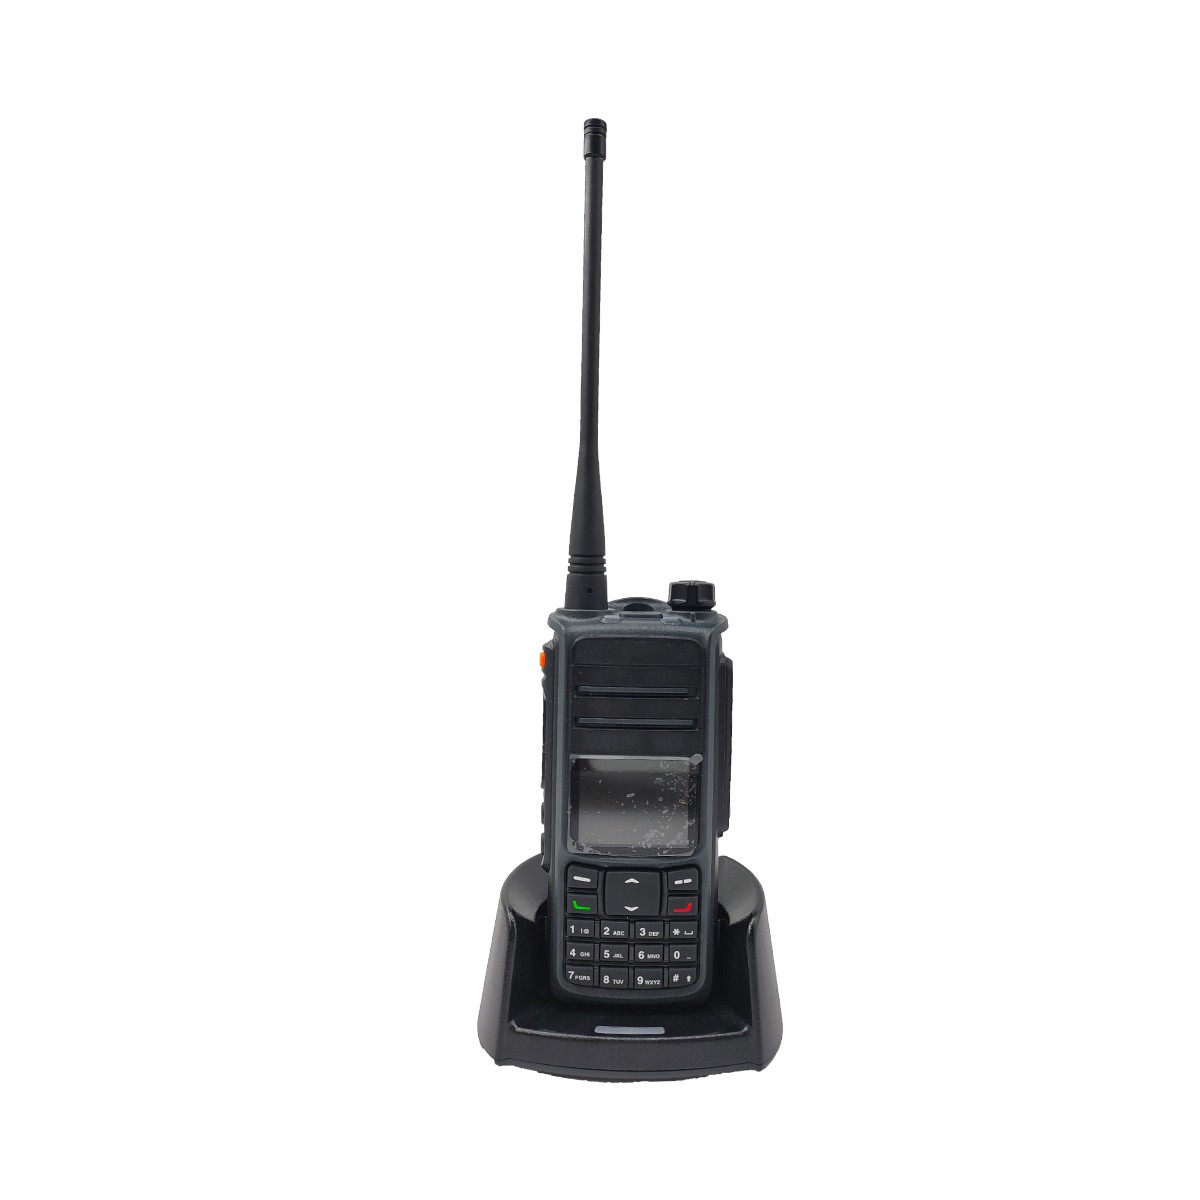 QYT digitale dmr analogico dual mode gps walkie talkie UV-D67H
